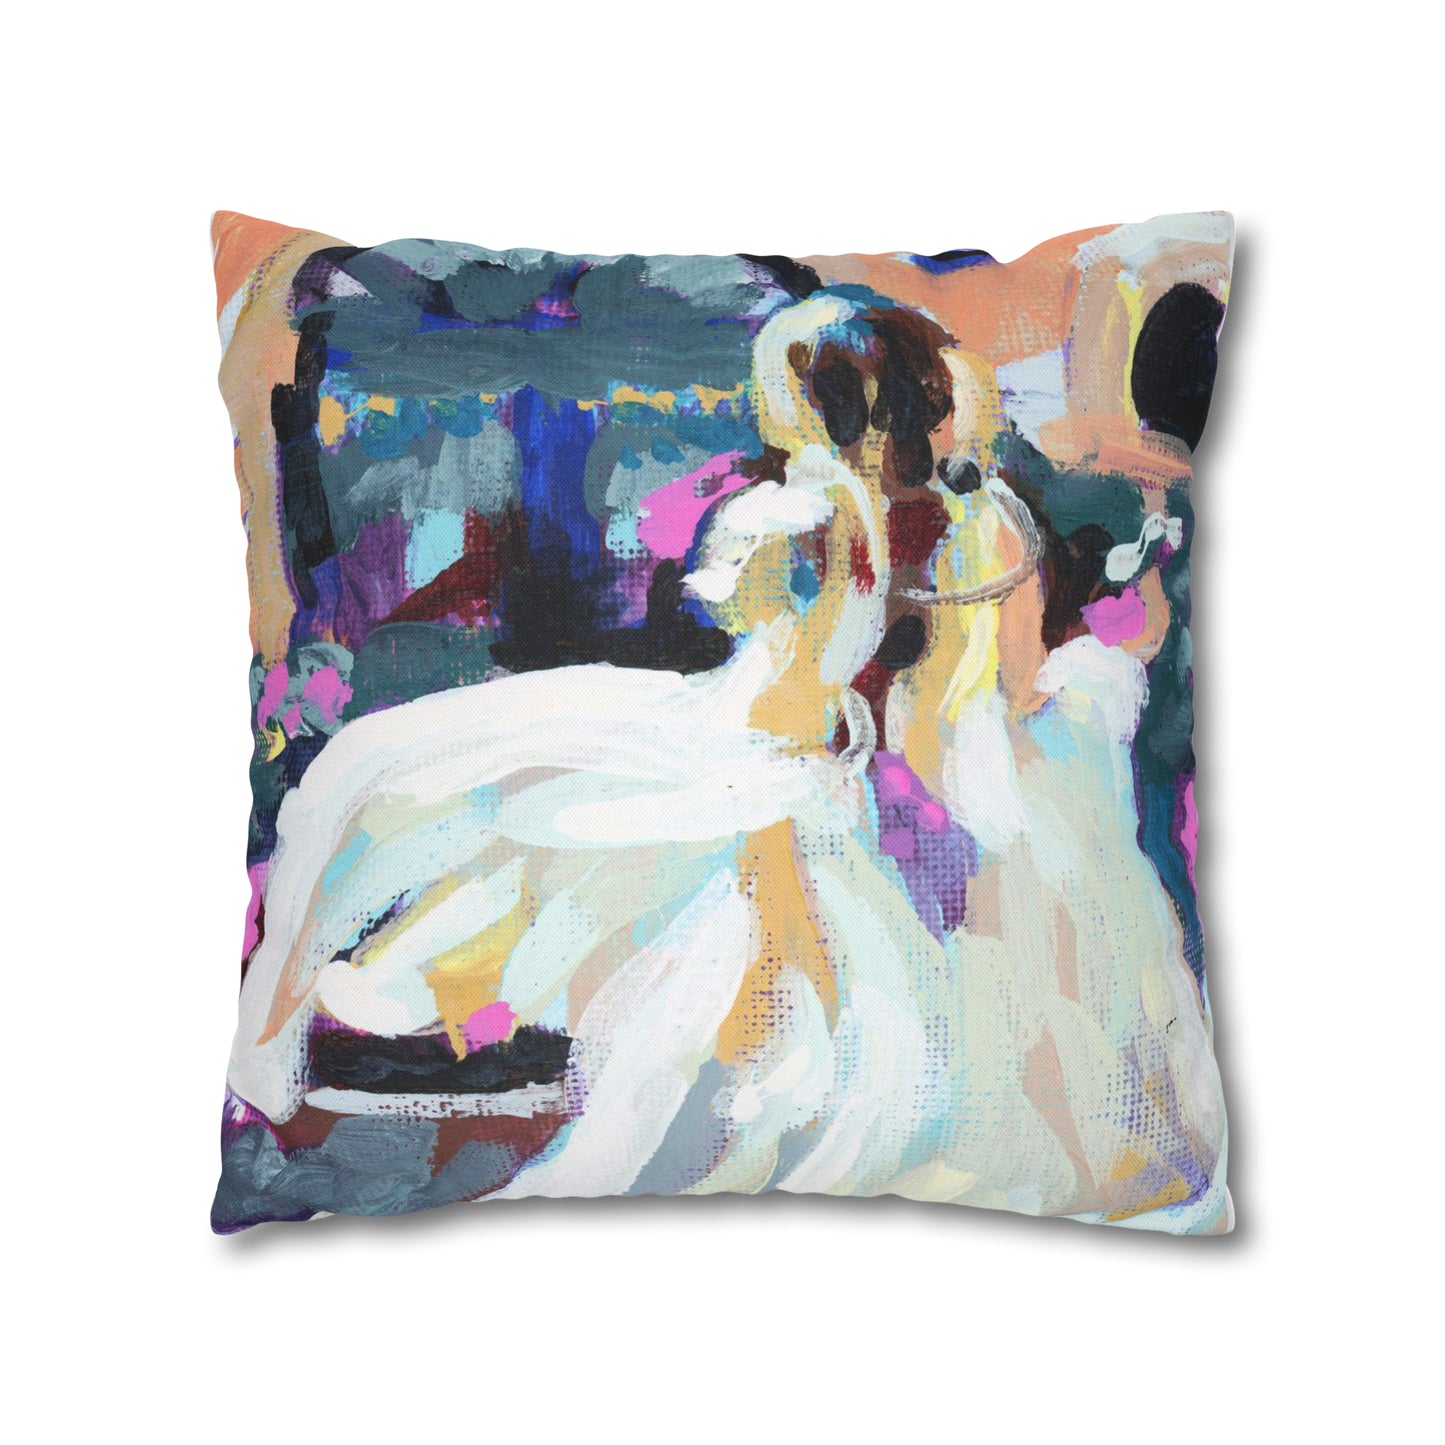 The Bridal Pillow